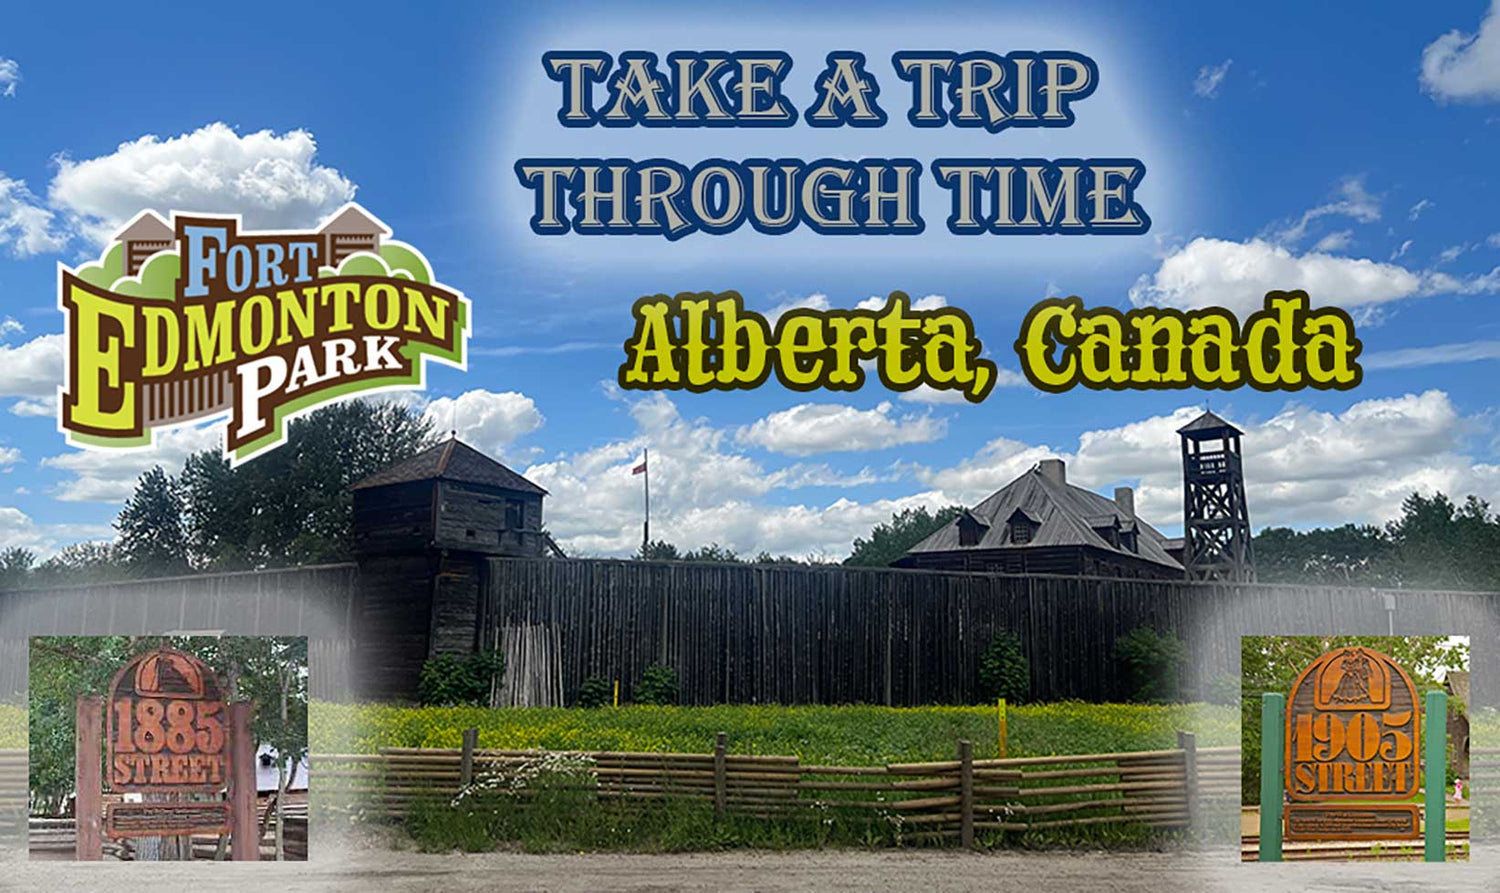 Fort Edmonton Park History- Edmonton, Alberta - past & present - Virtual Tour - Travel Through Time